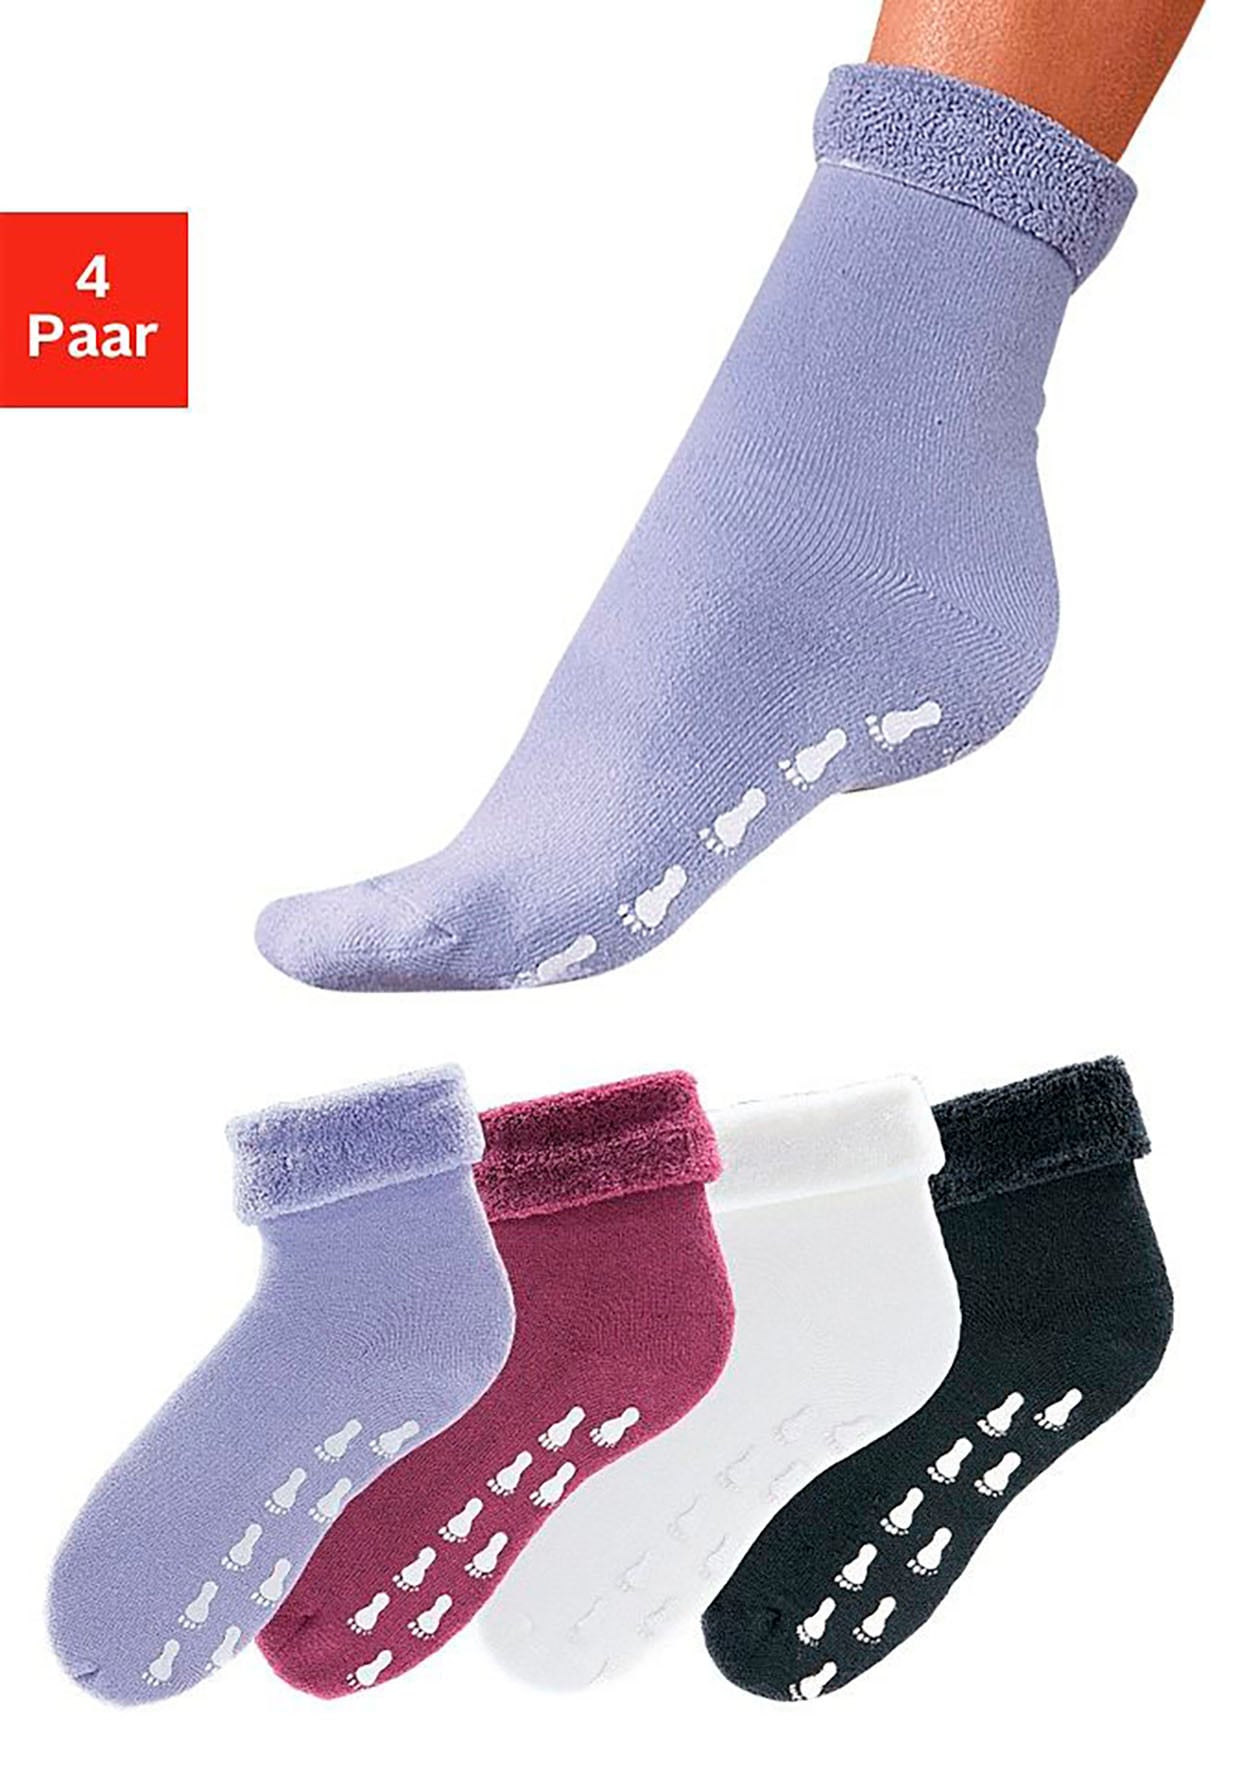 Image of Go in ABS-Socken, (4 Paar), mit Antirutschsohle und Vollfrottee